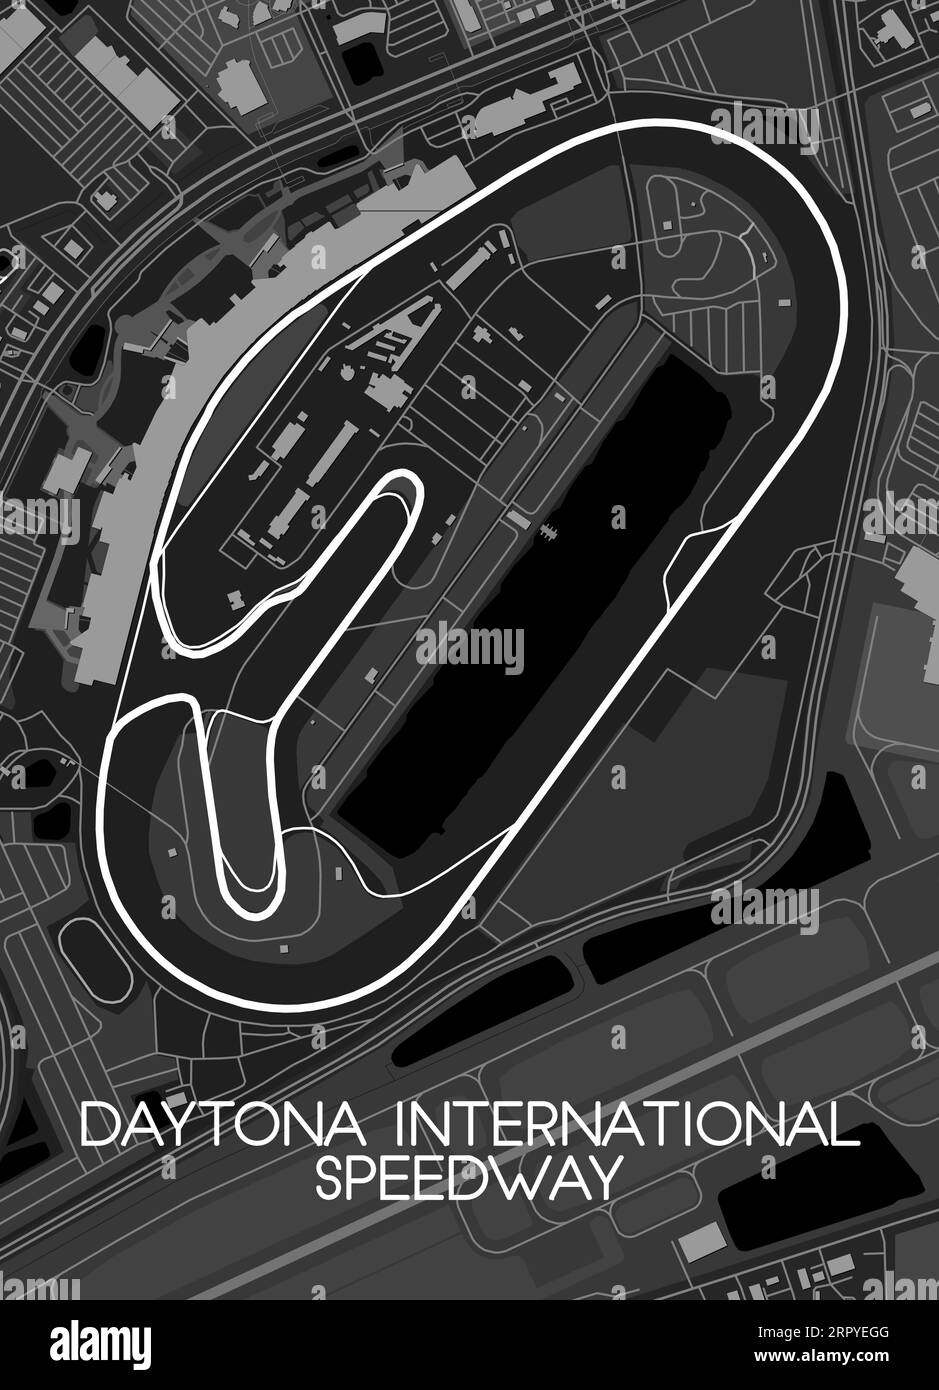 Daytona International Speedway - Road Course map Stock Vector